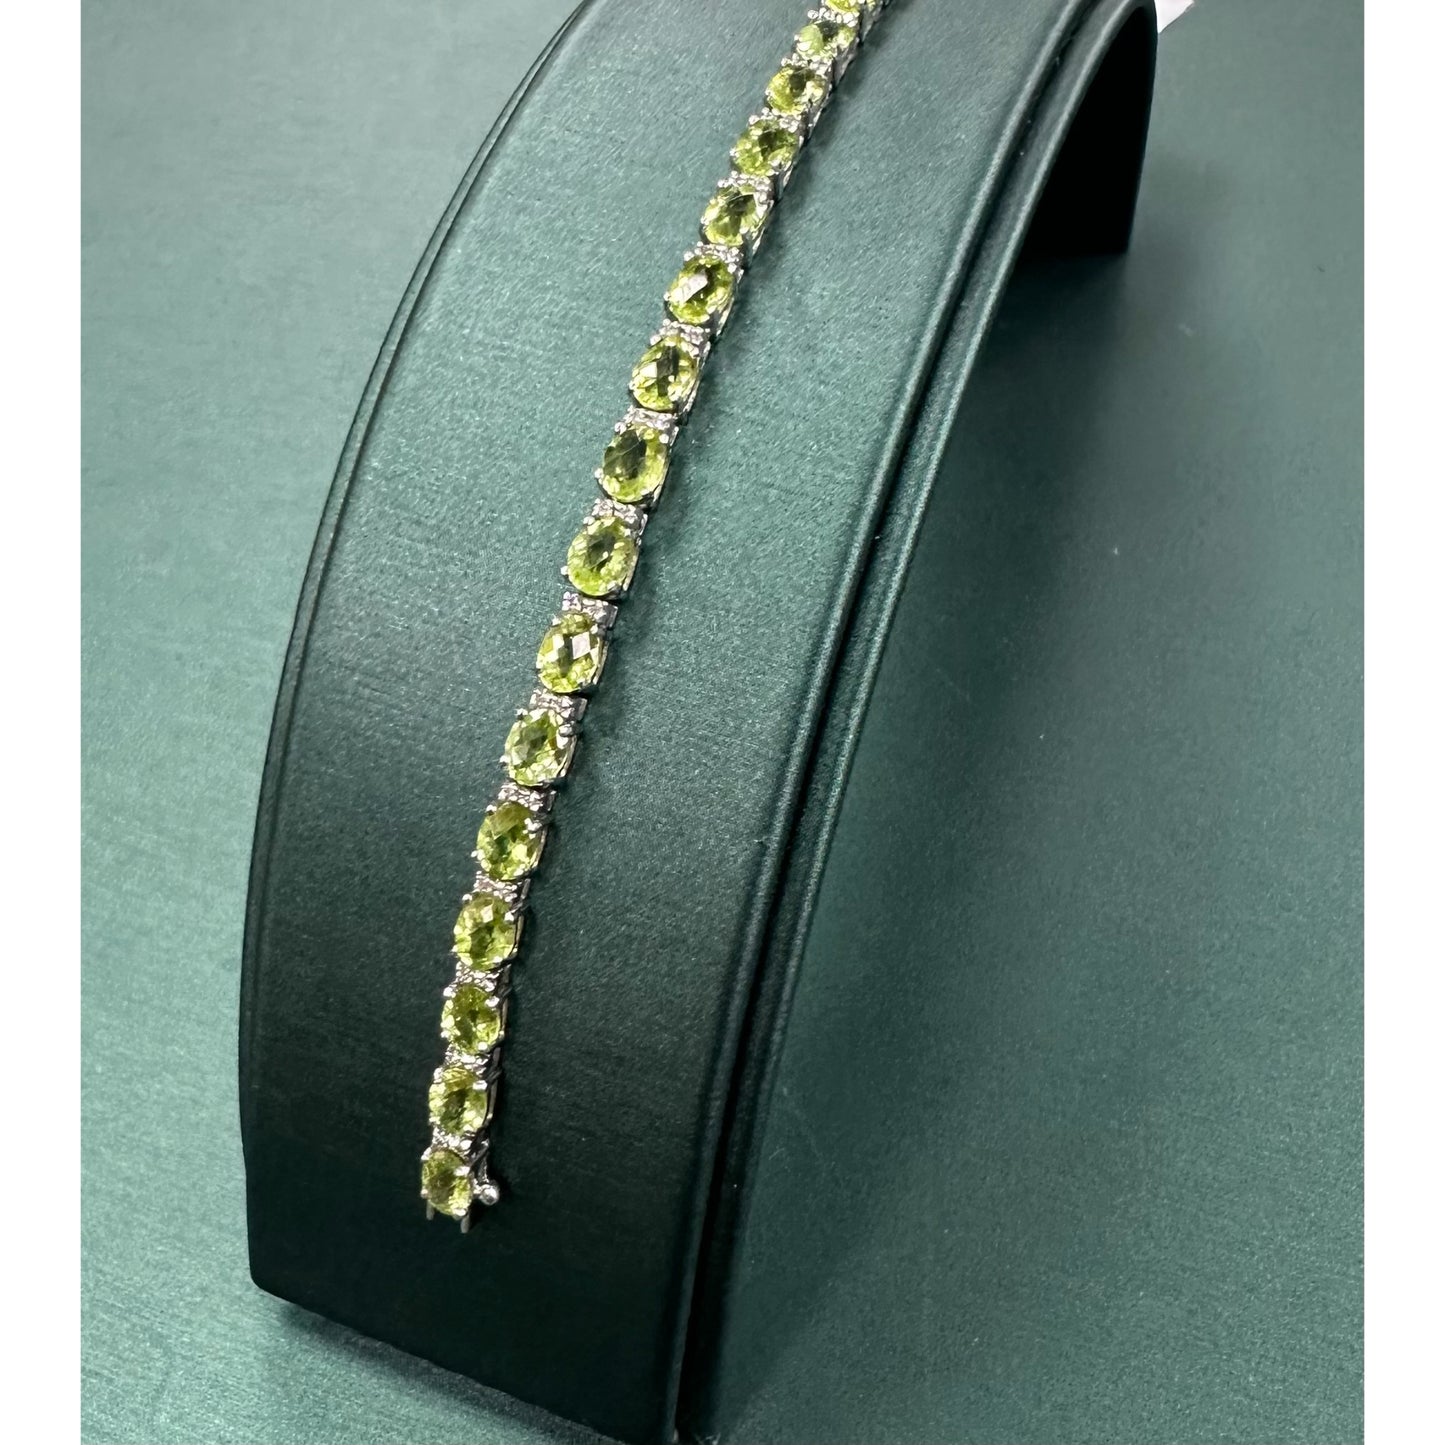 Peridot tennis bracelet 11.44 carats